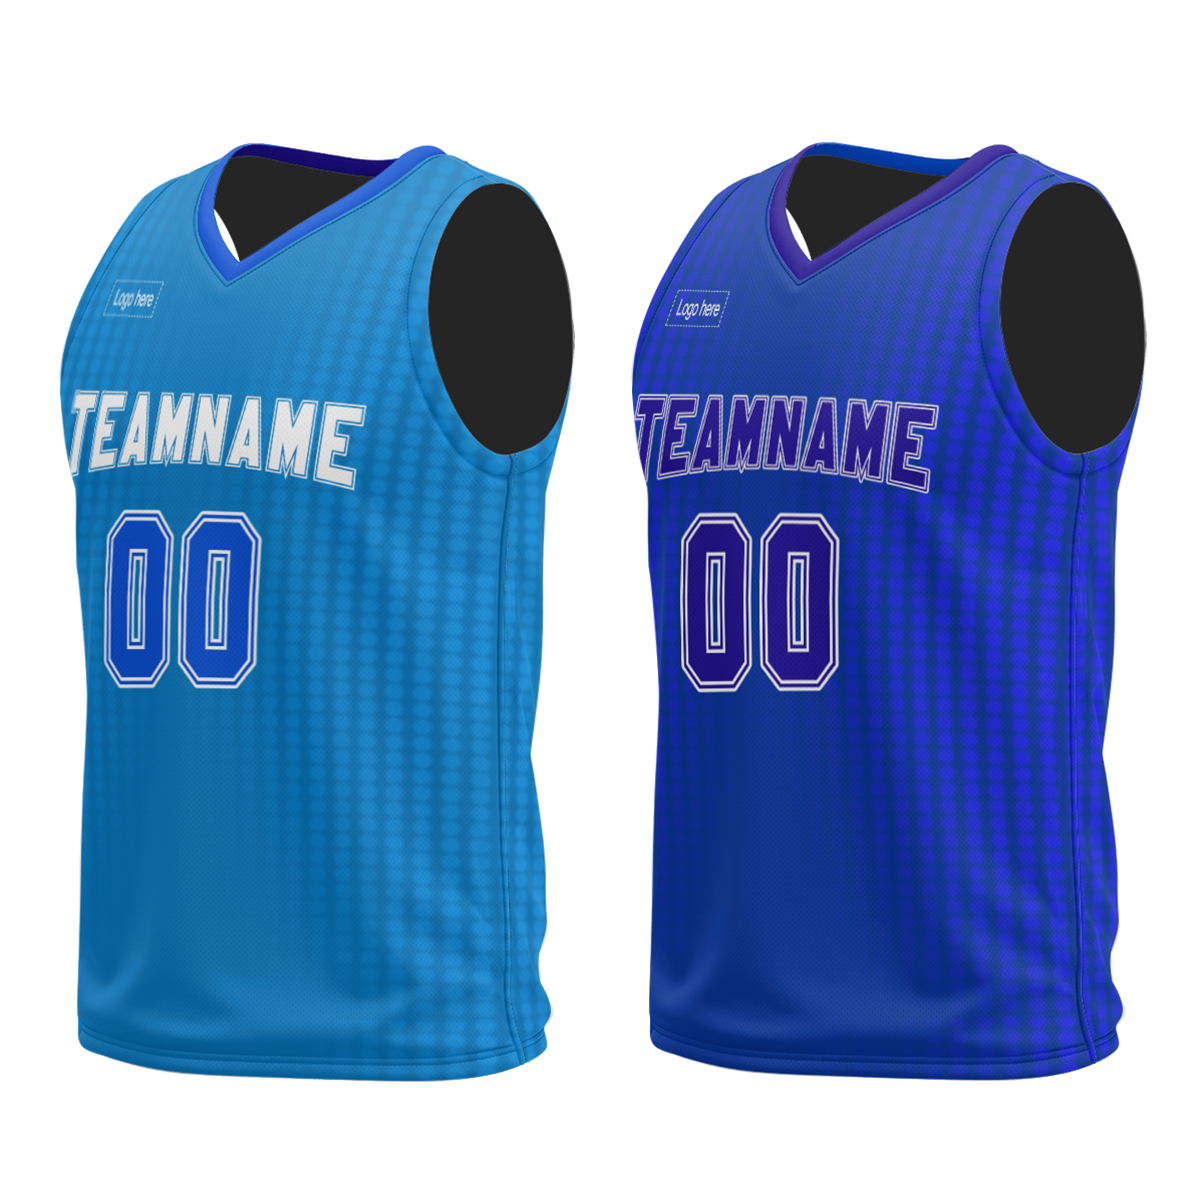 oem-custom-cheap-retro-practice-basketball-jerseys-sublimation-basketball-wear-breathable-quick-dry-basketball-shirts-uniforms-at-cj-pod-5